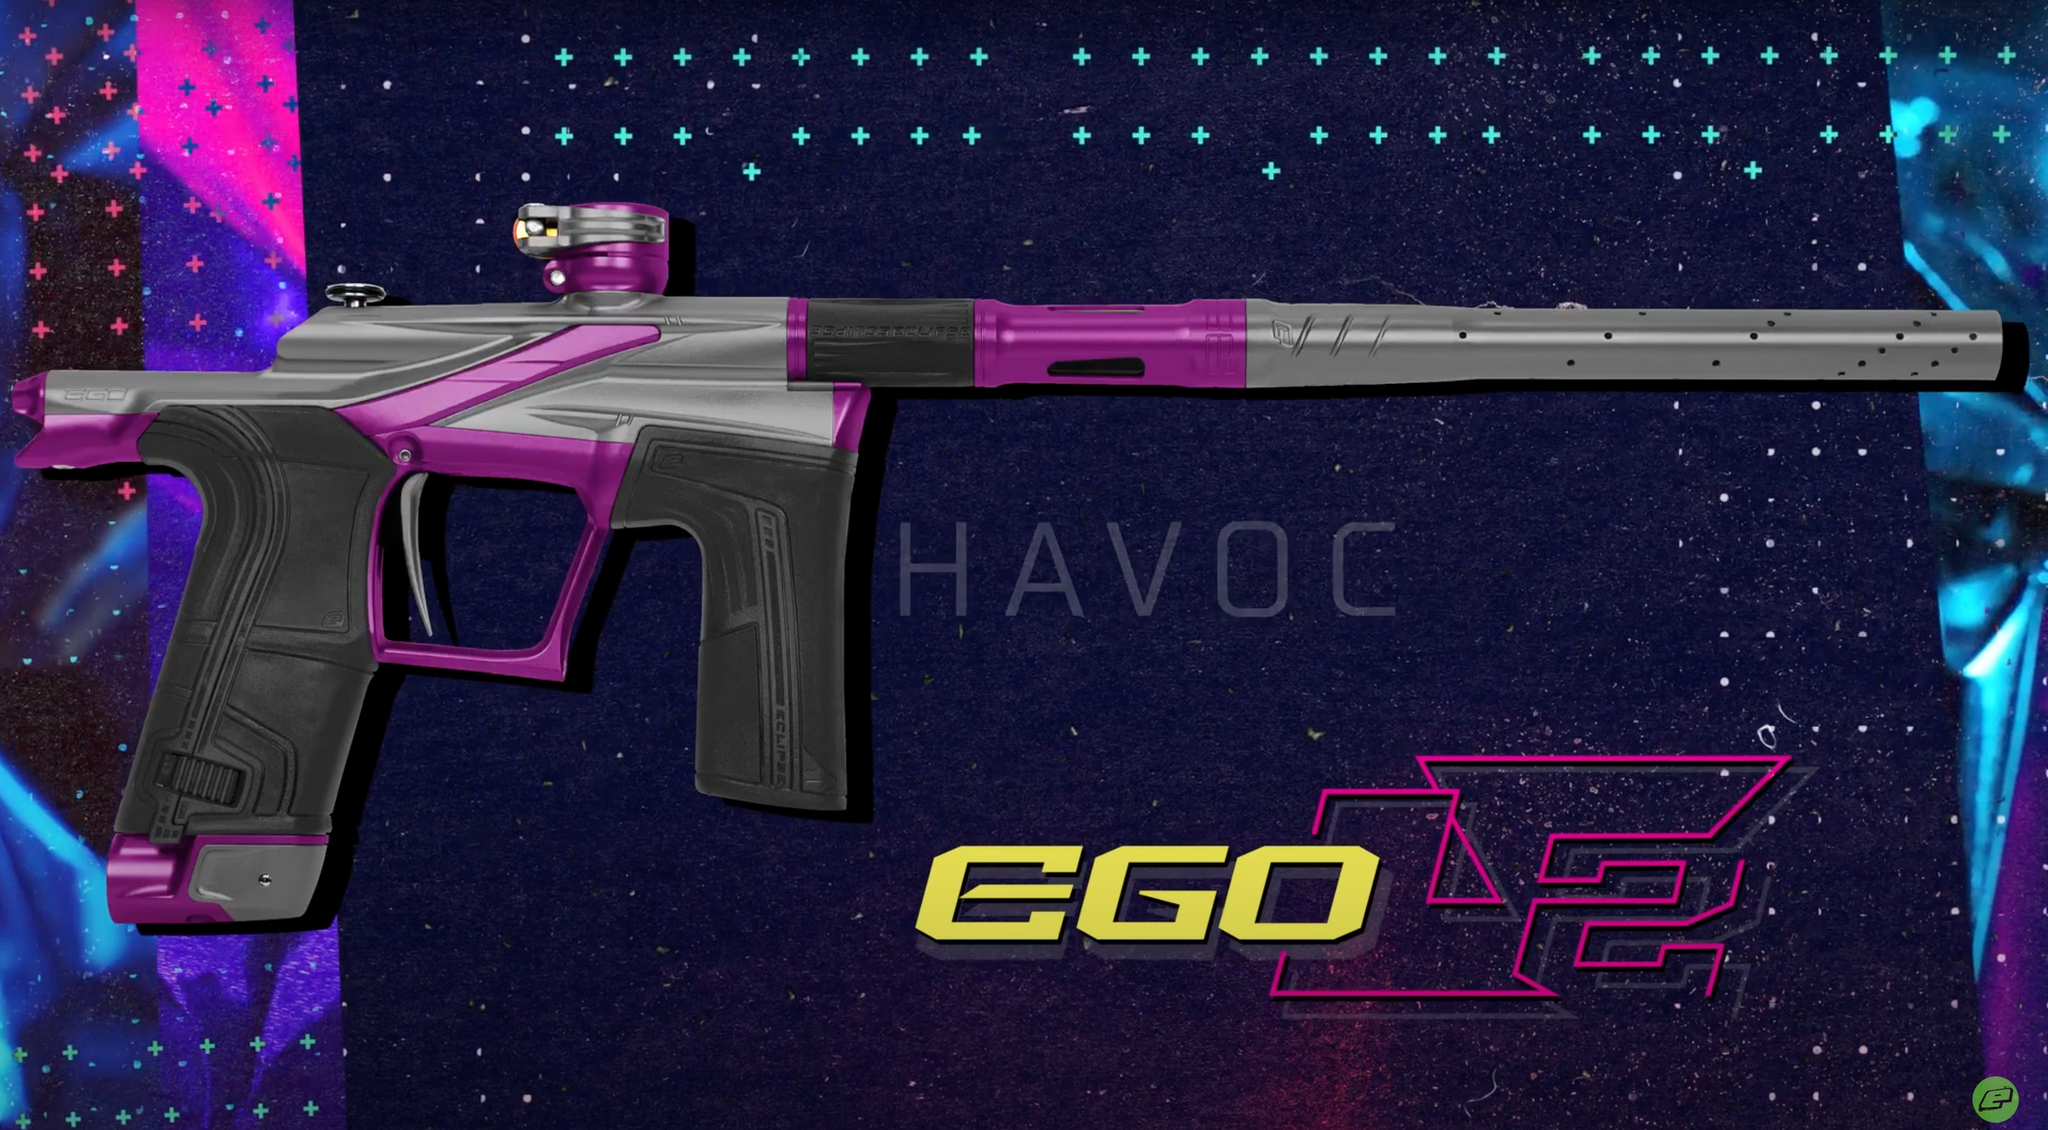 Planet Eclipse LV2 EGO Paintball Gun – paintballgateway